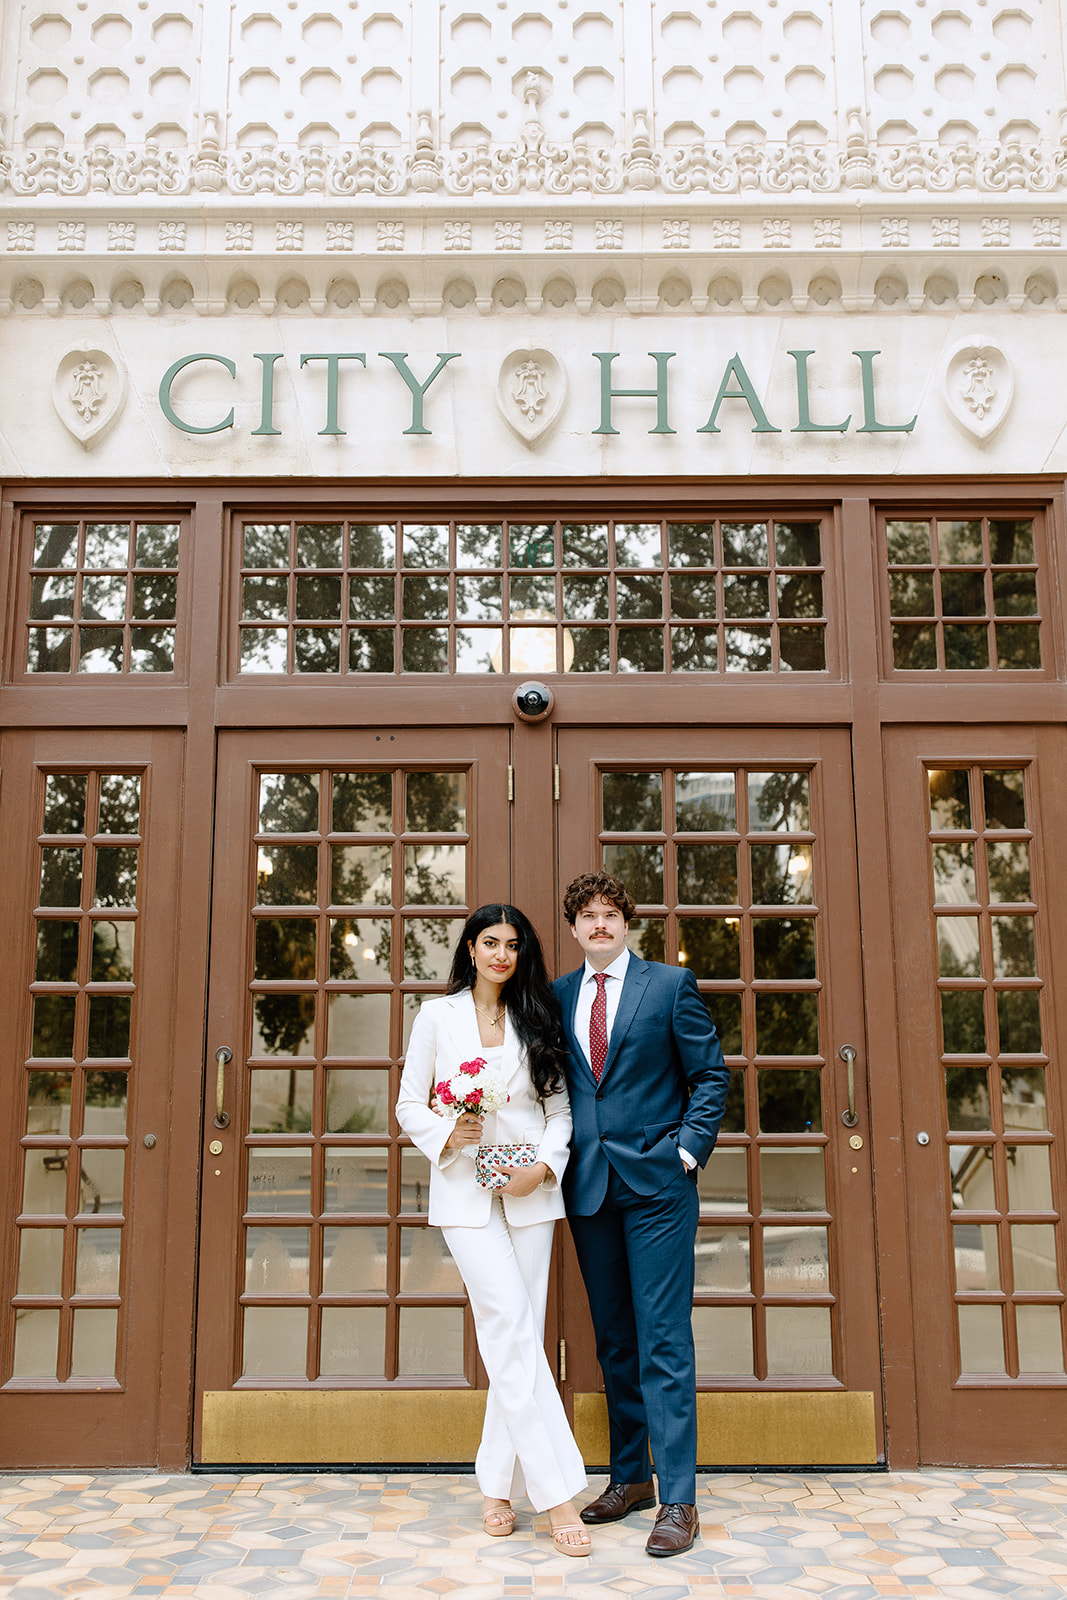 Bride and groom in front of city hall doors